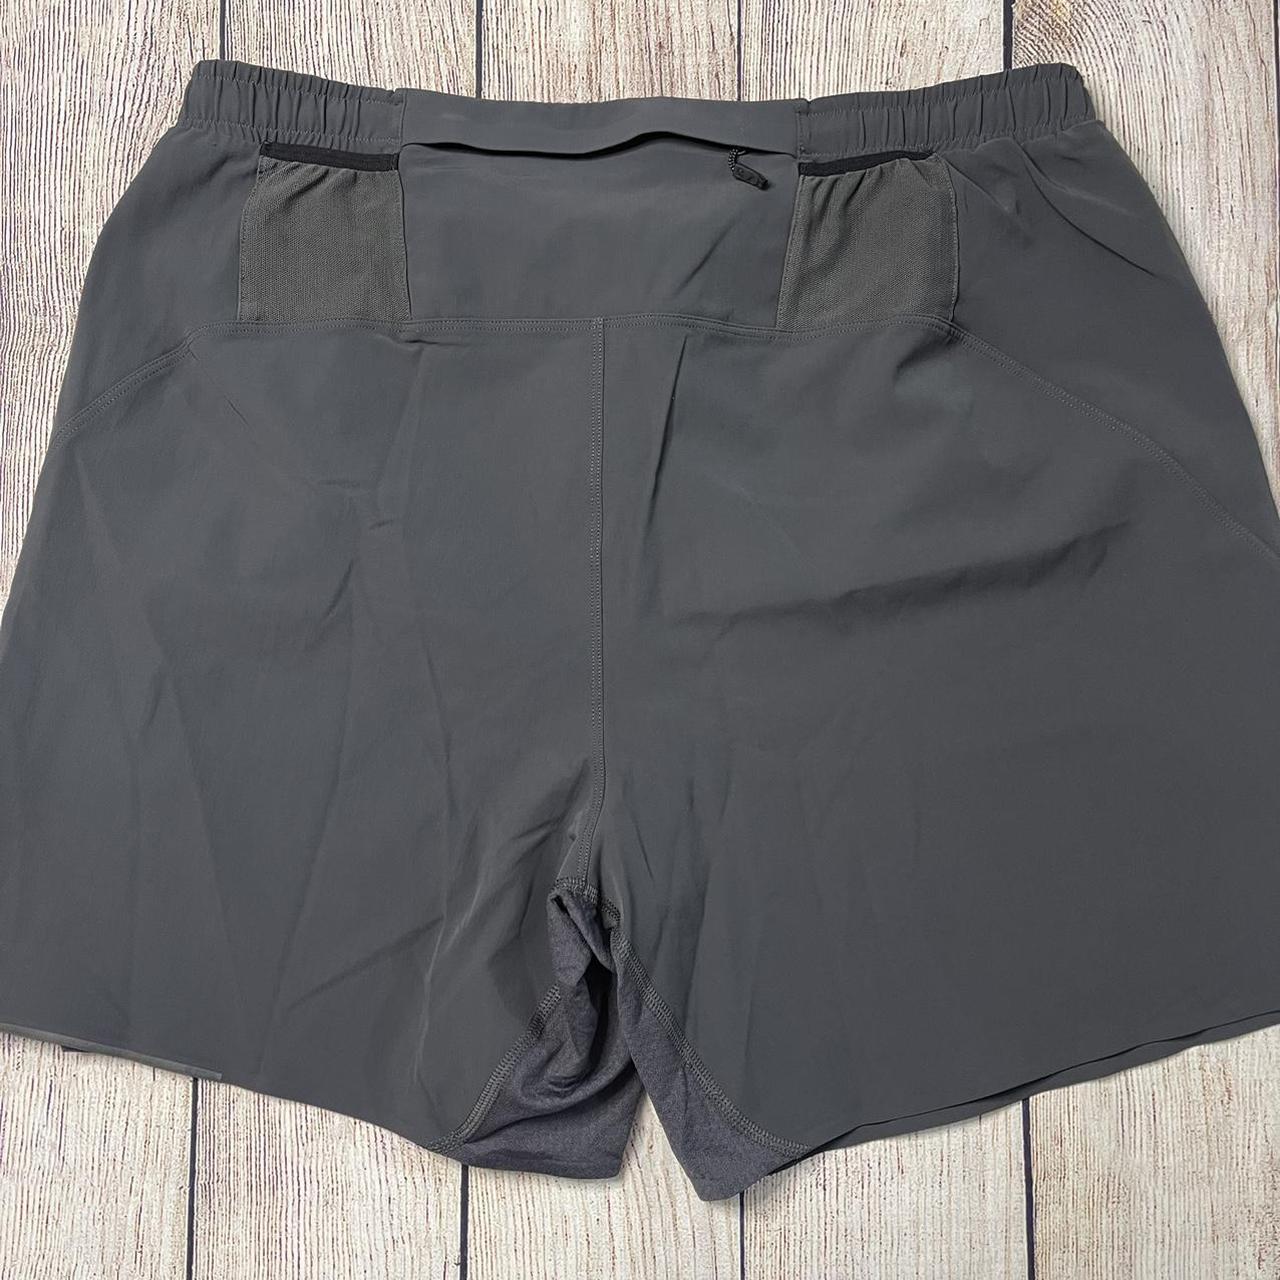 Lululemon Men's Grey Shorts (3)